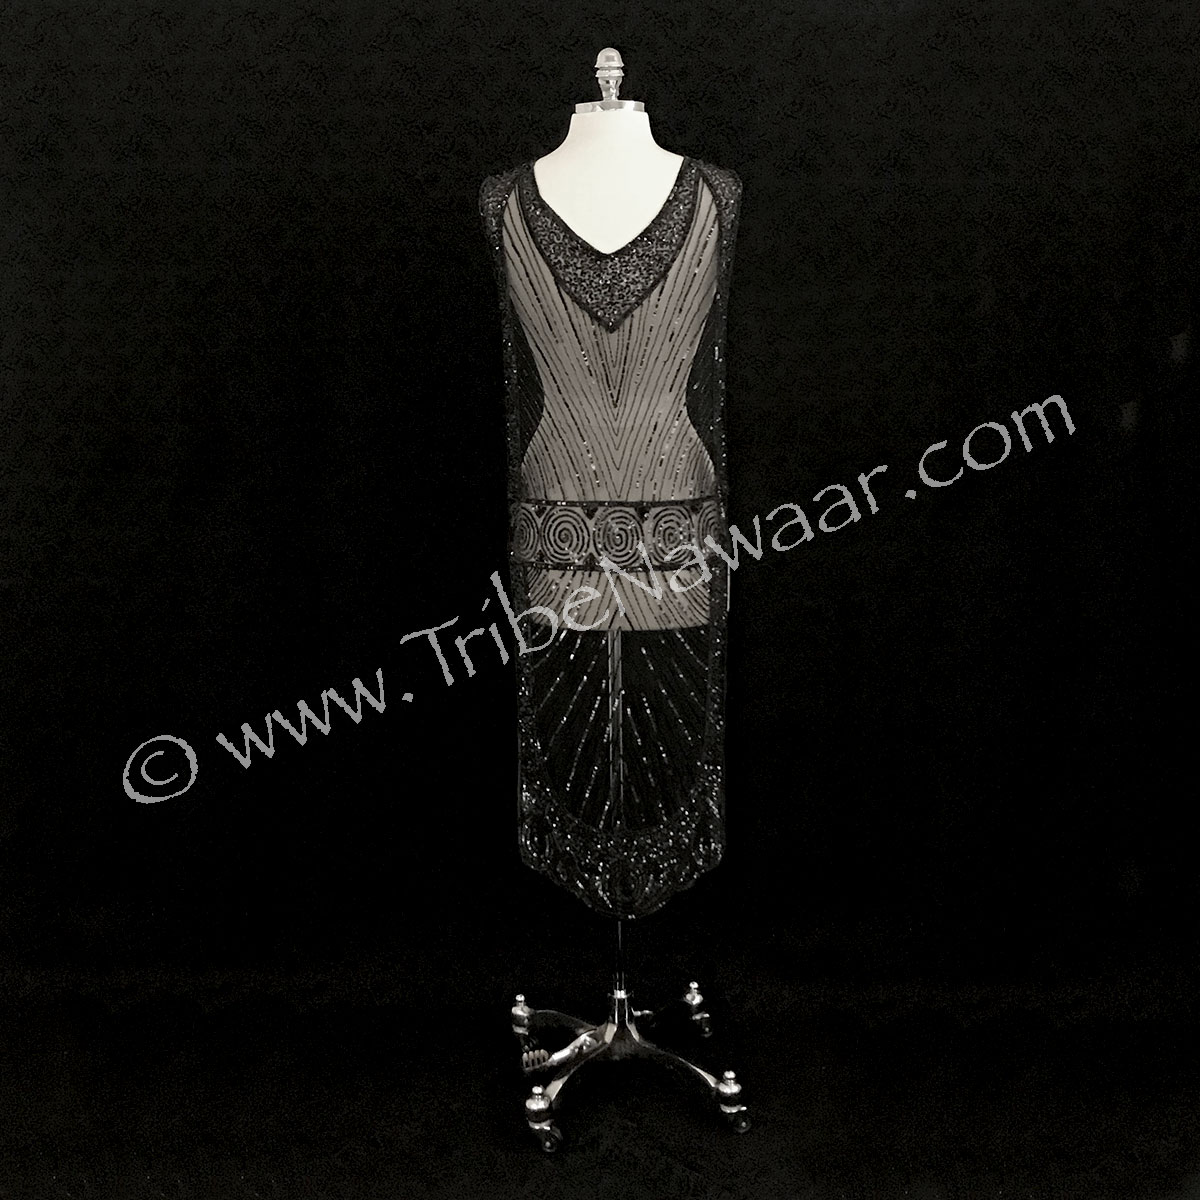 1920s black evening dresses